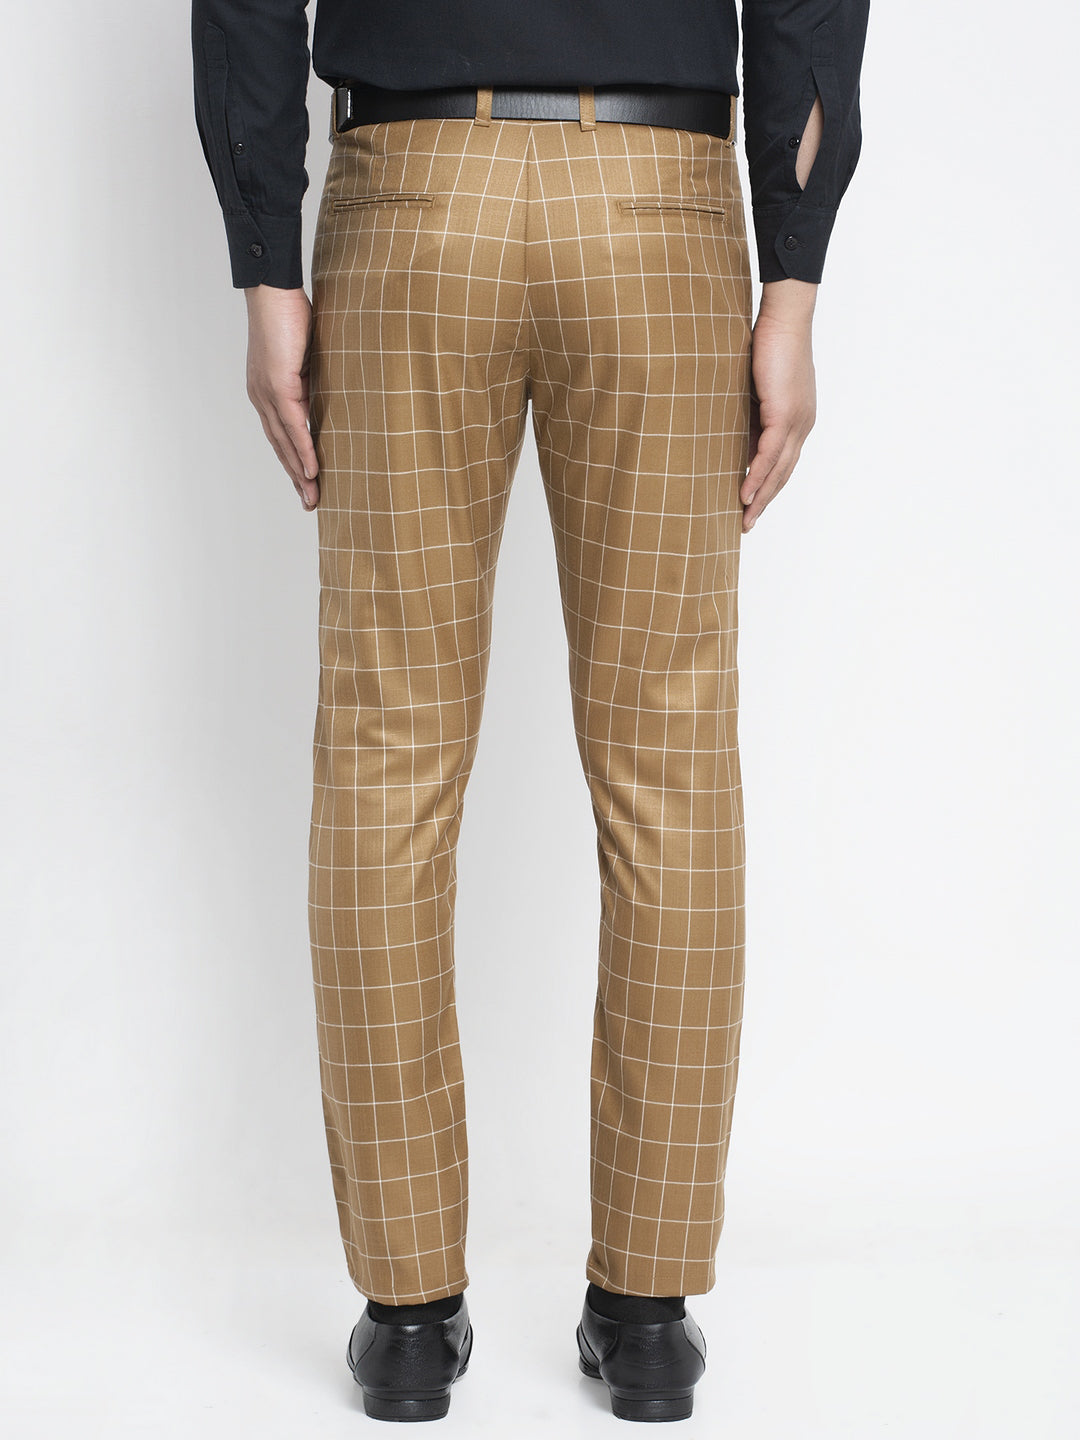 Buy Men Grey Check Slim Fit Formal Trousers Online - 627966 | Peter England